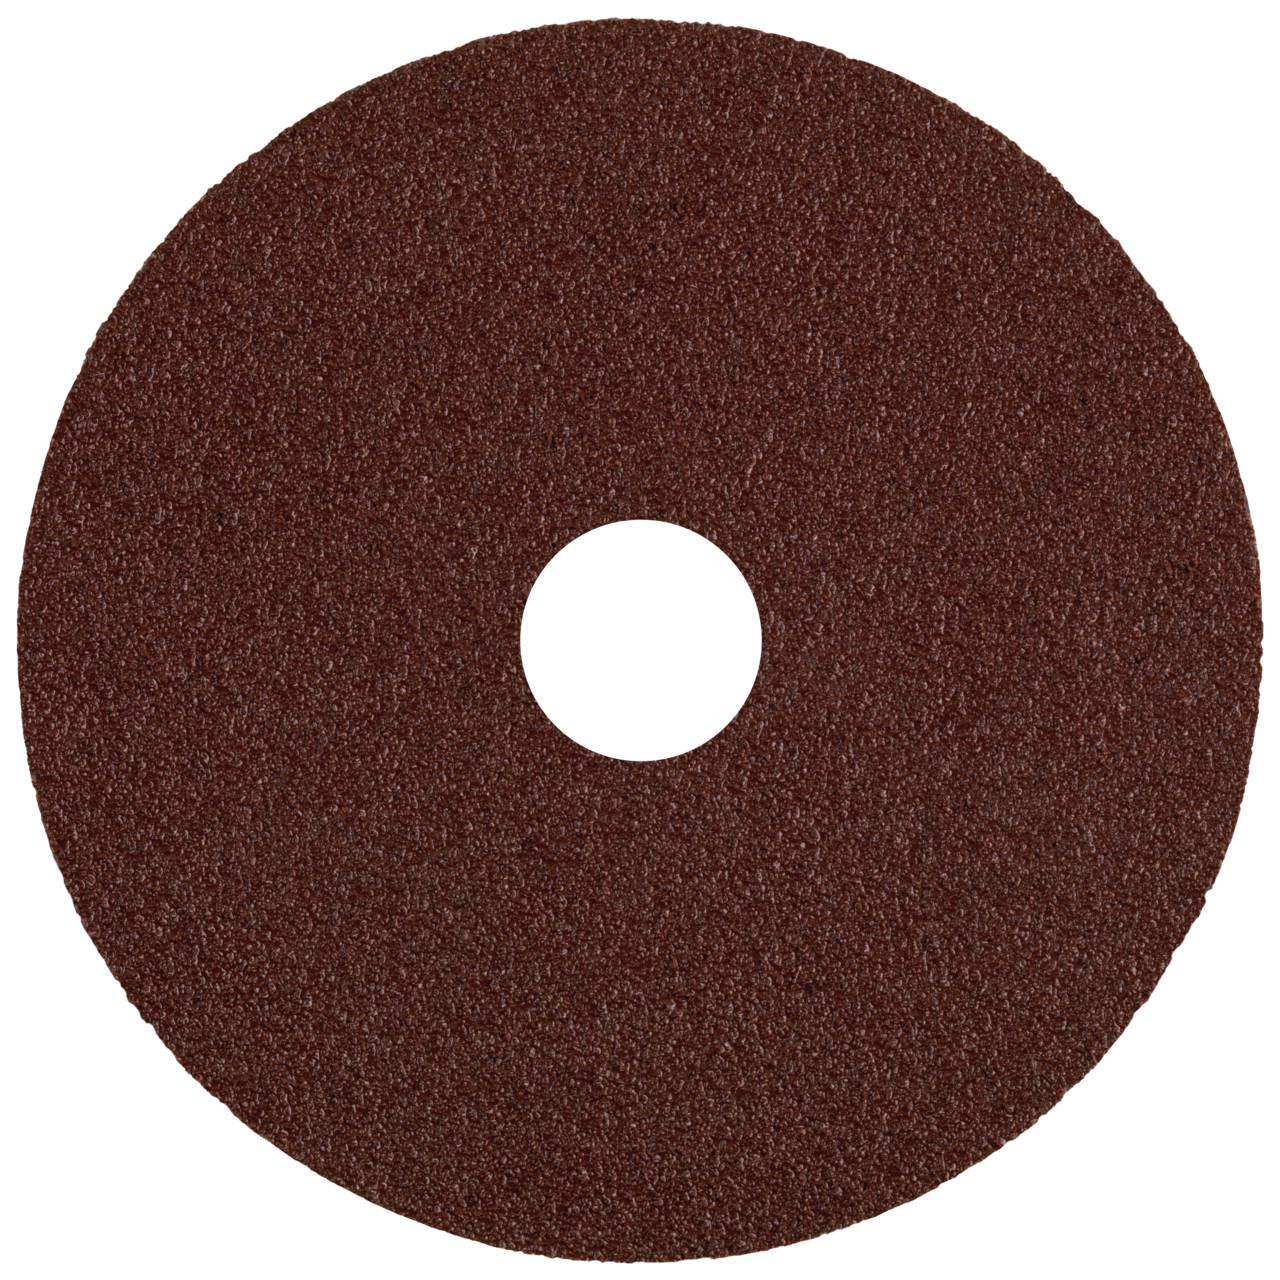 Tyrolit A-B02 V Vulcanised fibre disc DxH 115x22 For steel, non-ferrous metals and wood, P120, shape: DISC, Art. 34286498